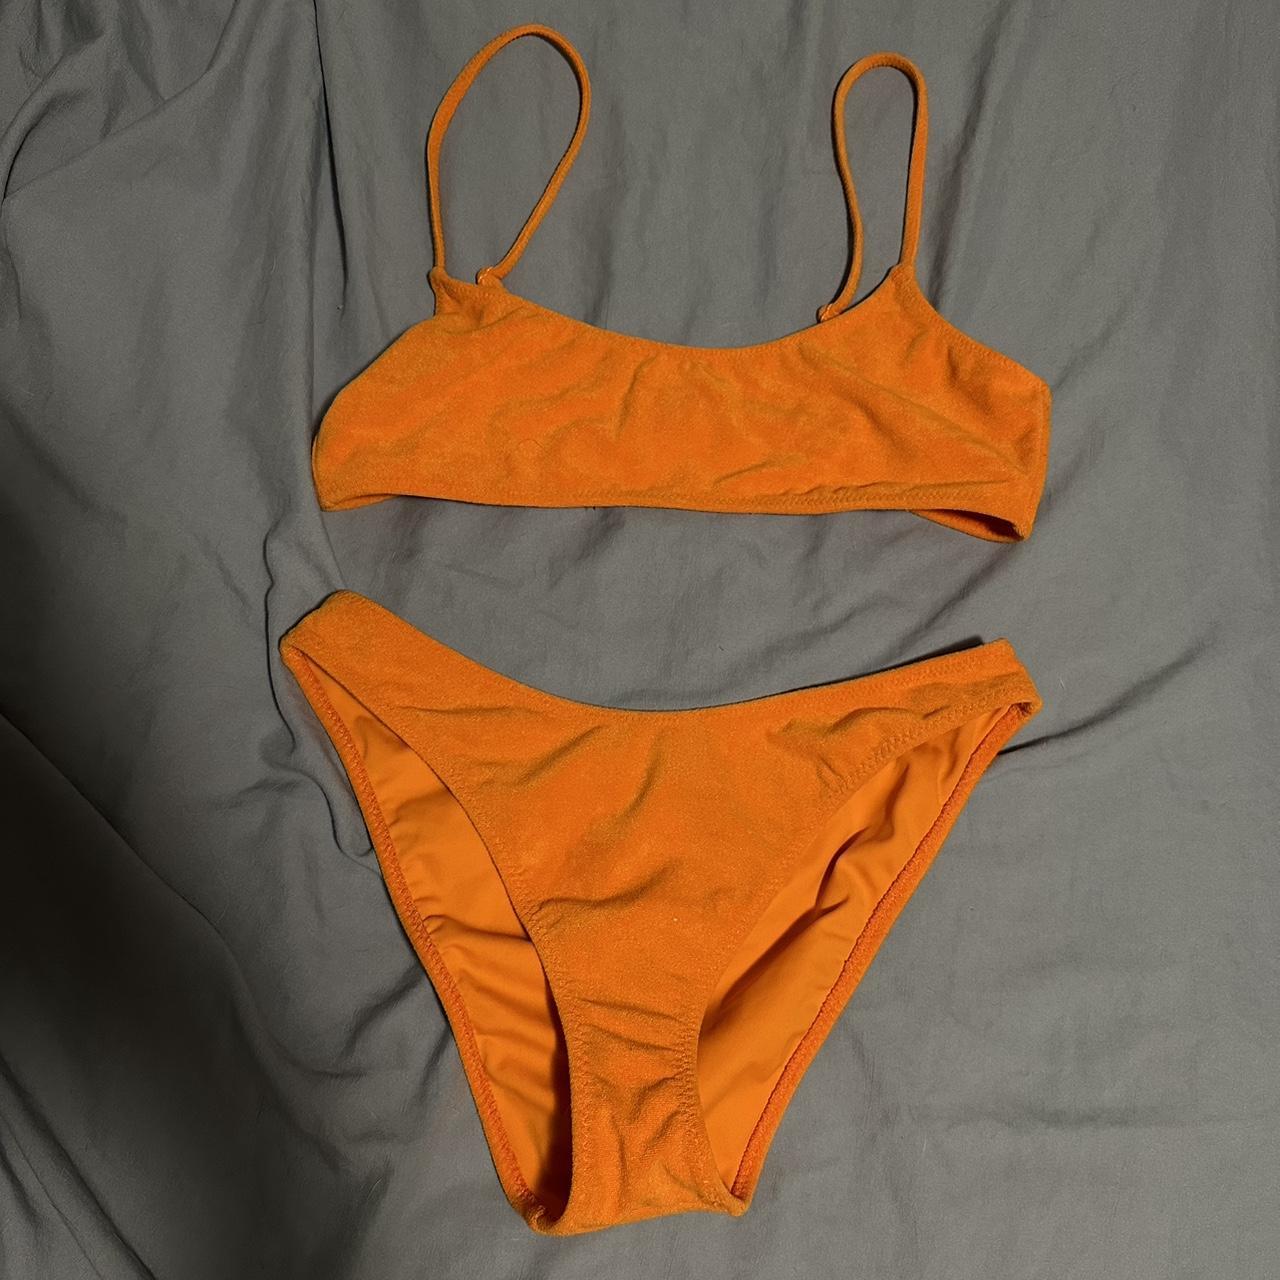 PacSun Women's Bikinis-and-tankini-sets